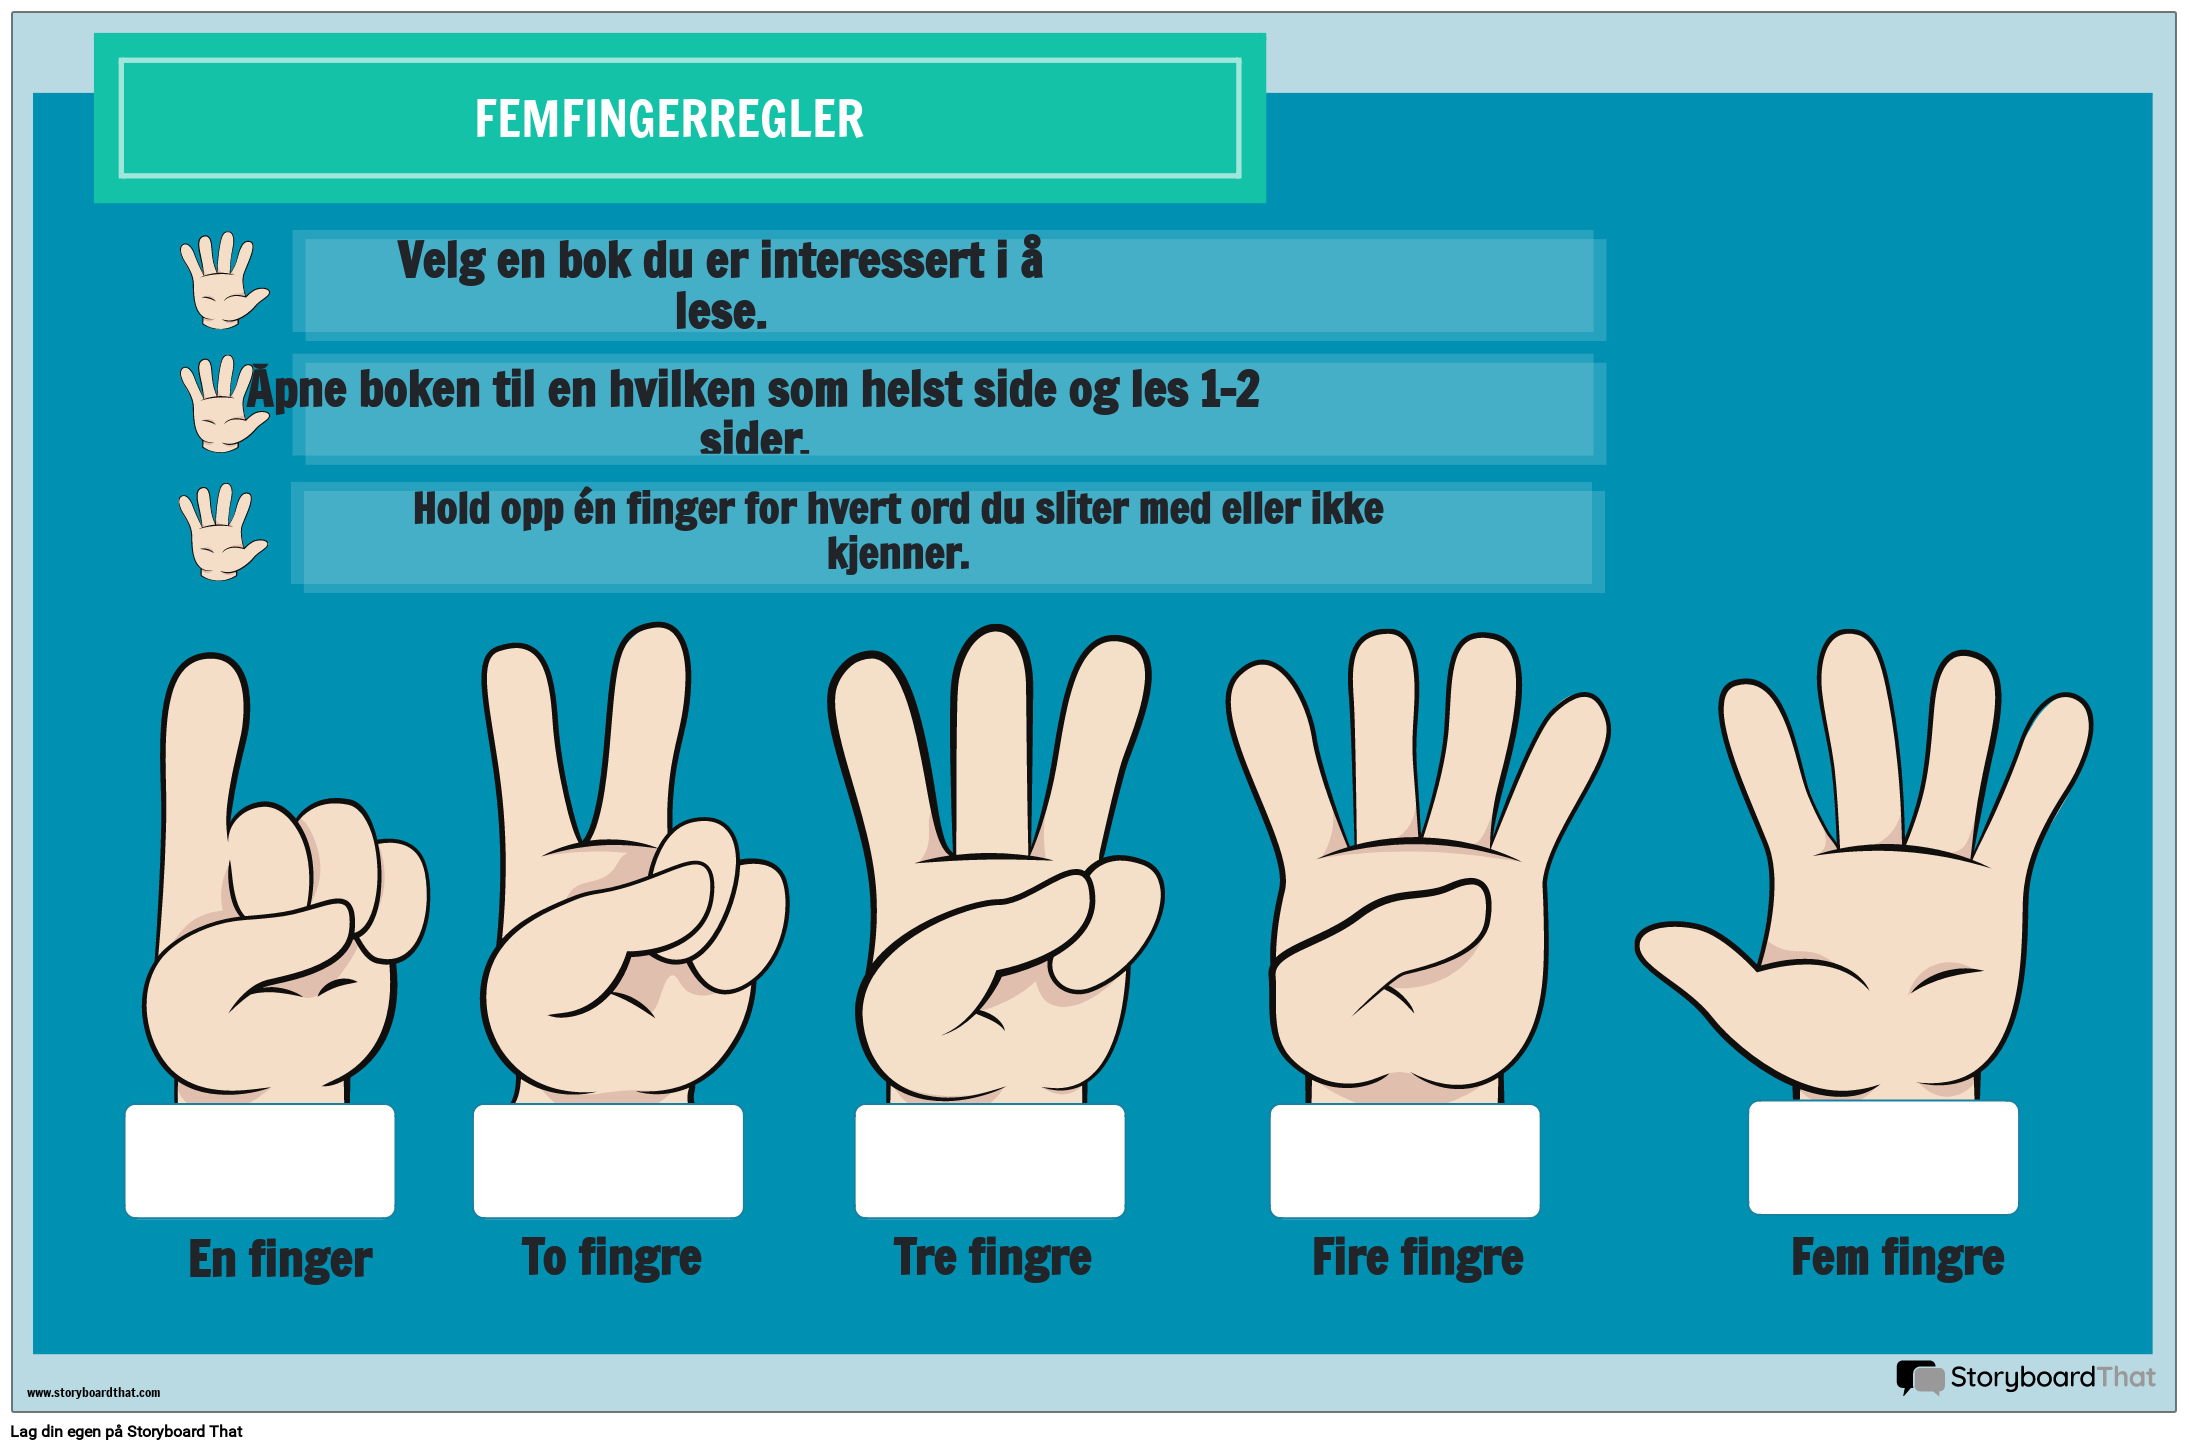 5 Finger Rule - Akkurat Riktig Bokplakat